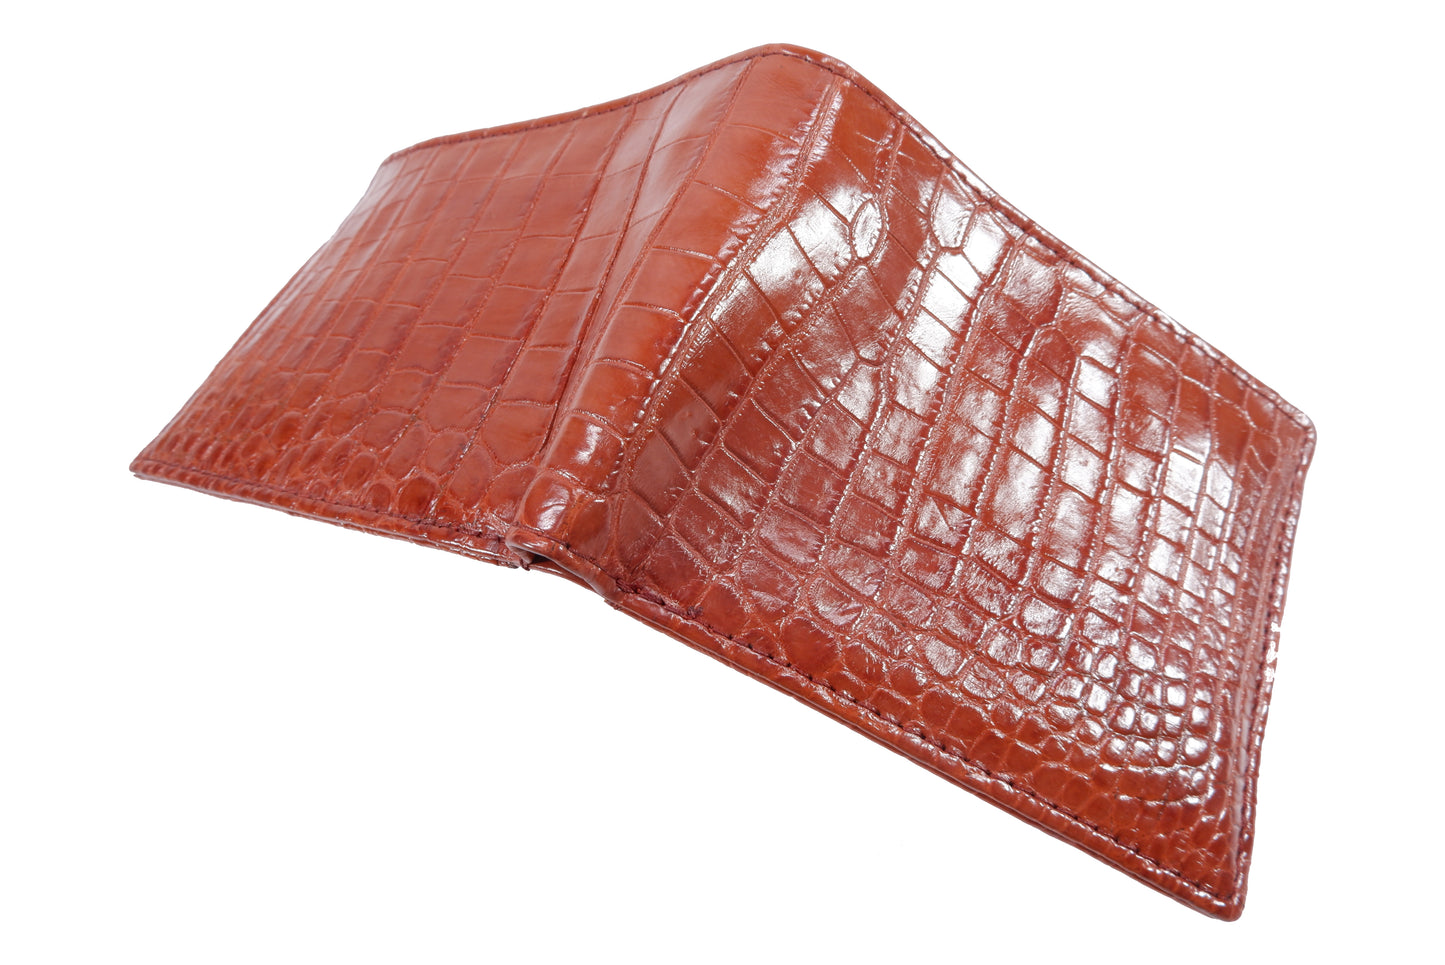 Genuine Crocodile Belly Skin Leather Bifold Wallet with Crocodile Skin Interior